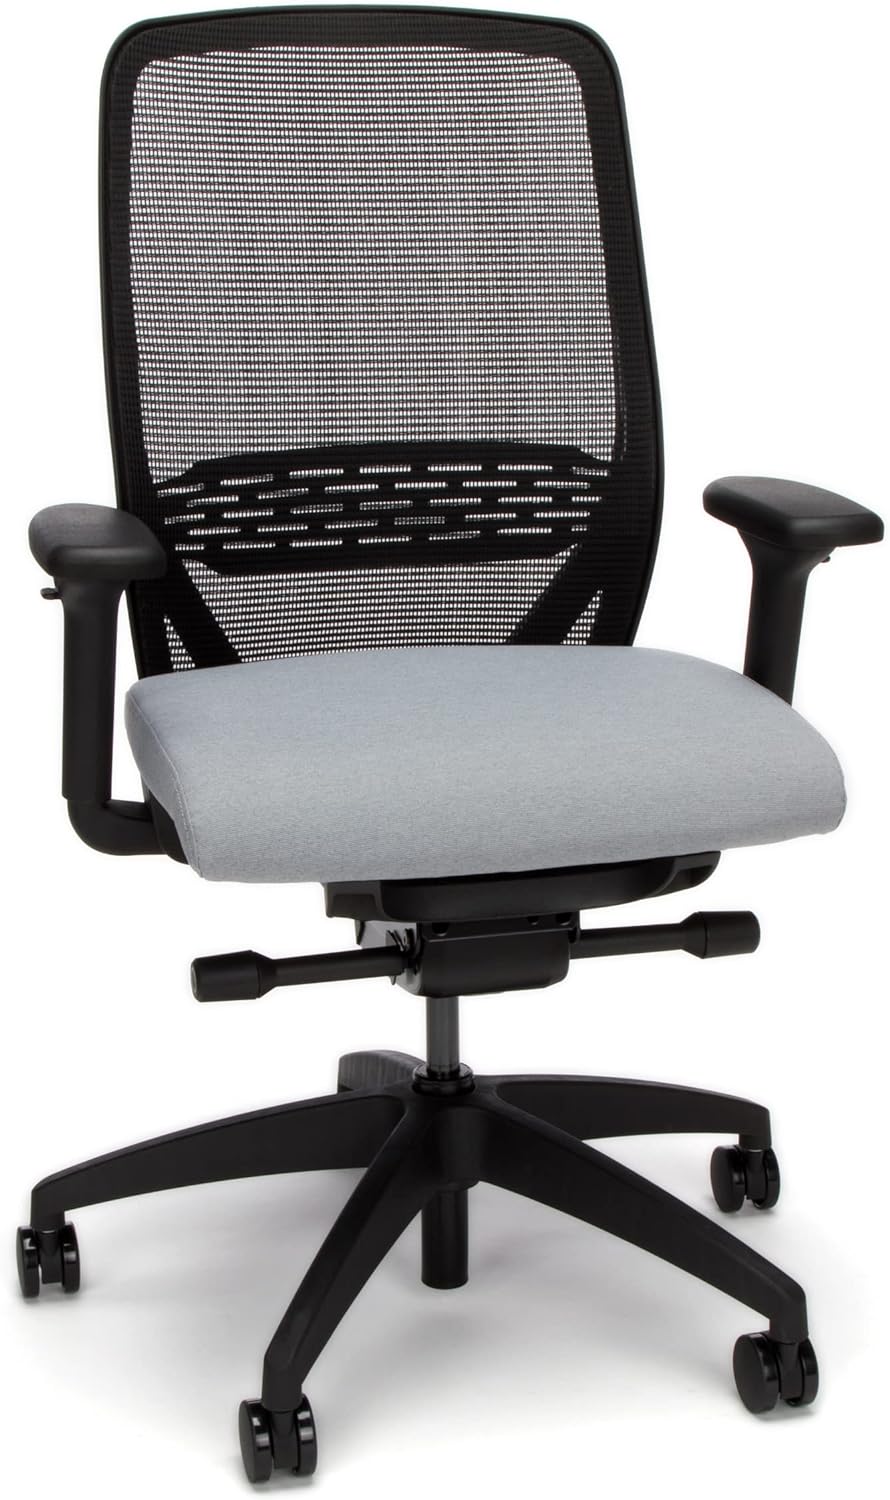 HON Nucleus Recharged Black Office Chair Ergonomic Suspended Seat Mesh Back Computer Desk Chair for Home Office, Task Work - Synchro-Tilt Recline, Swivel Wheels, Adjustable Lumbar Support & Armrests